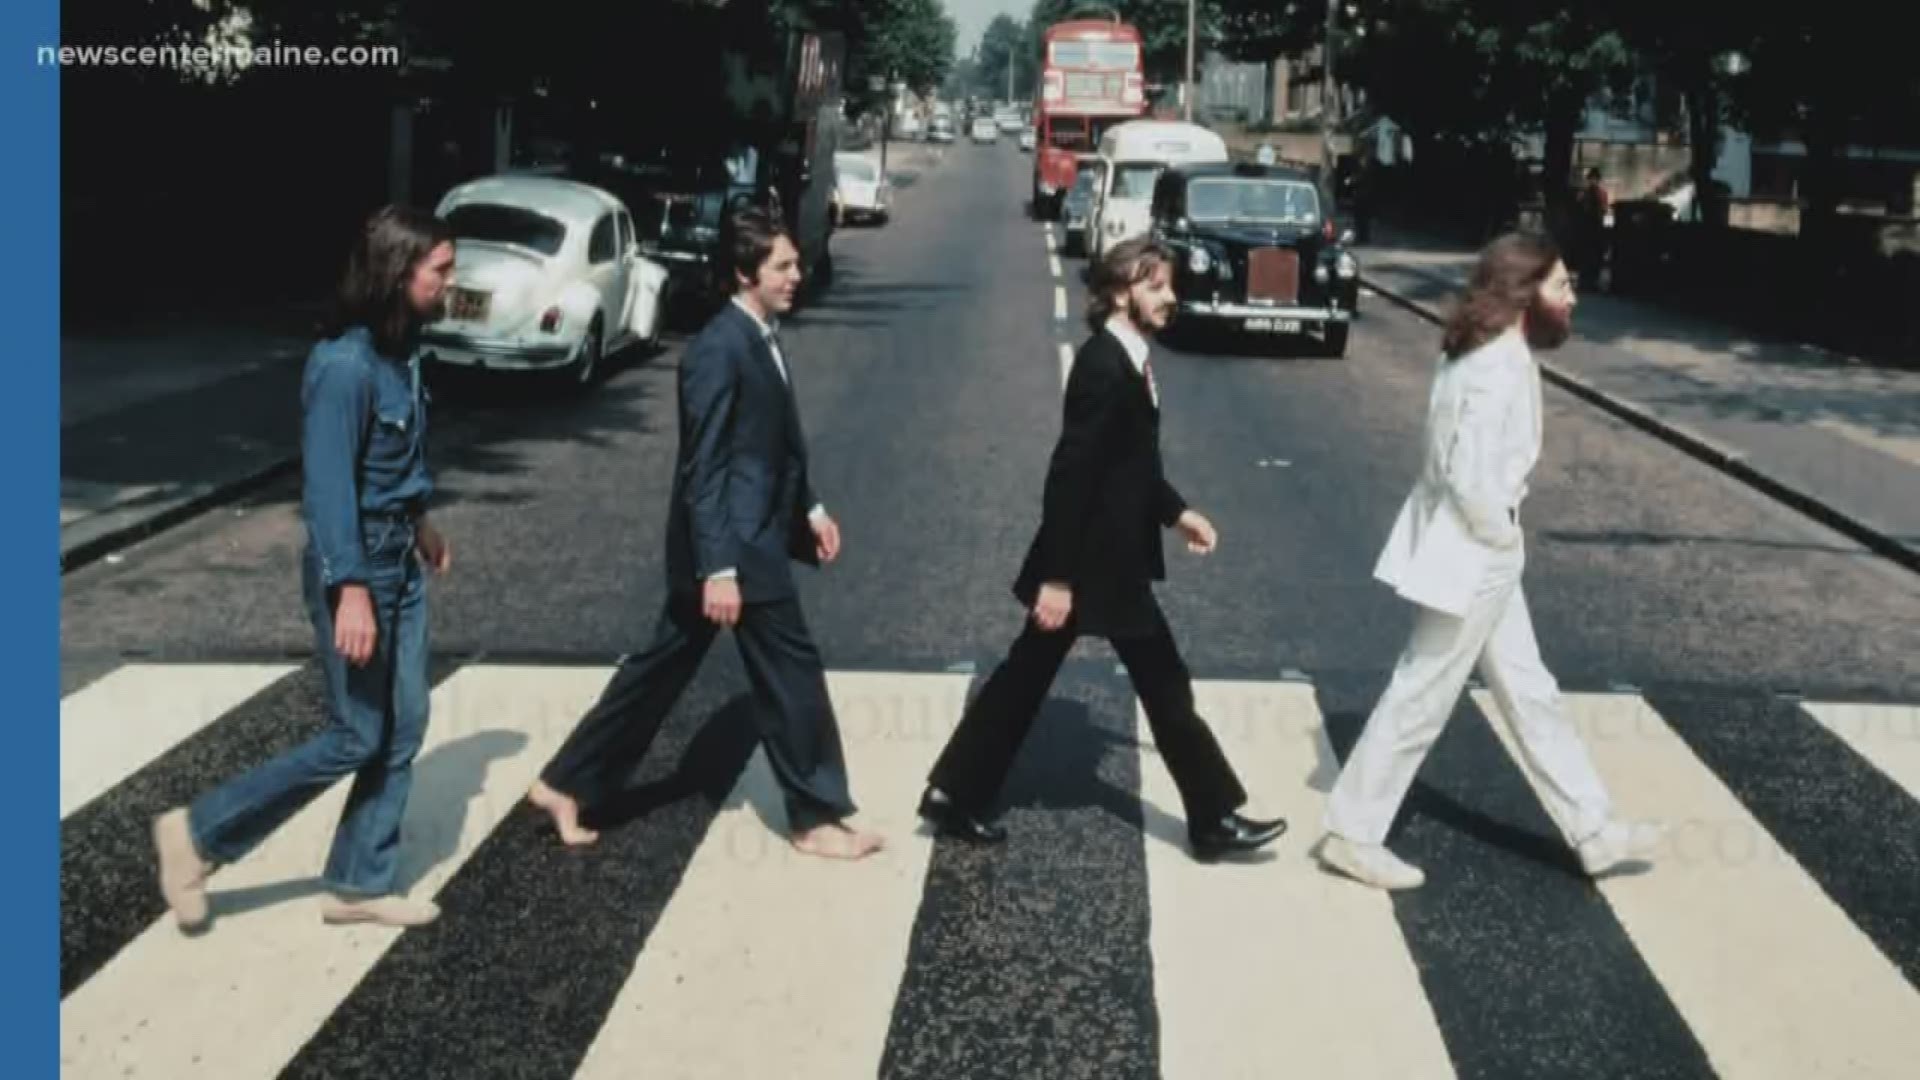 After half a century, the Beatles’ final album sounds better than ever.